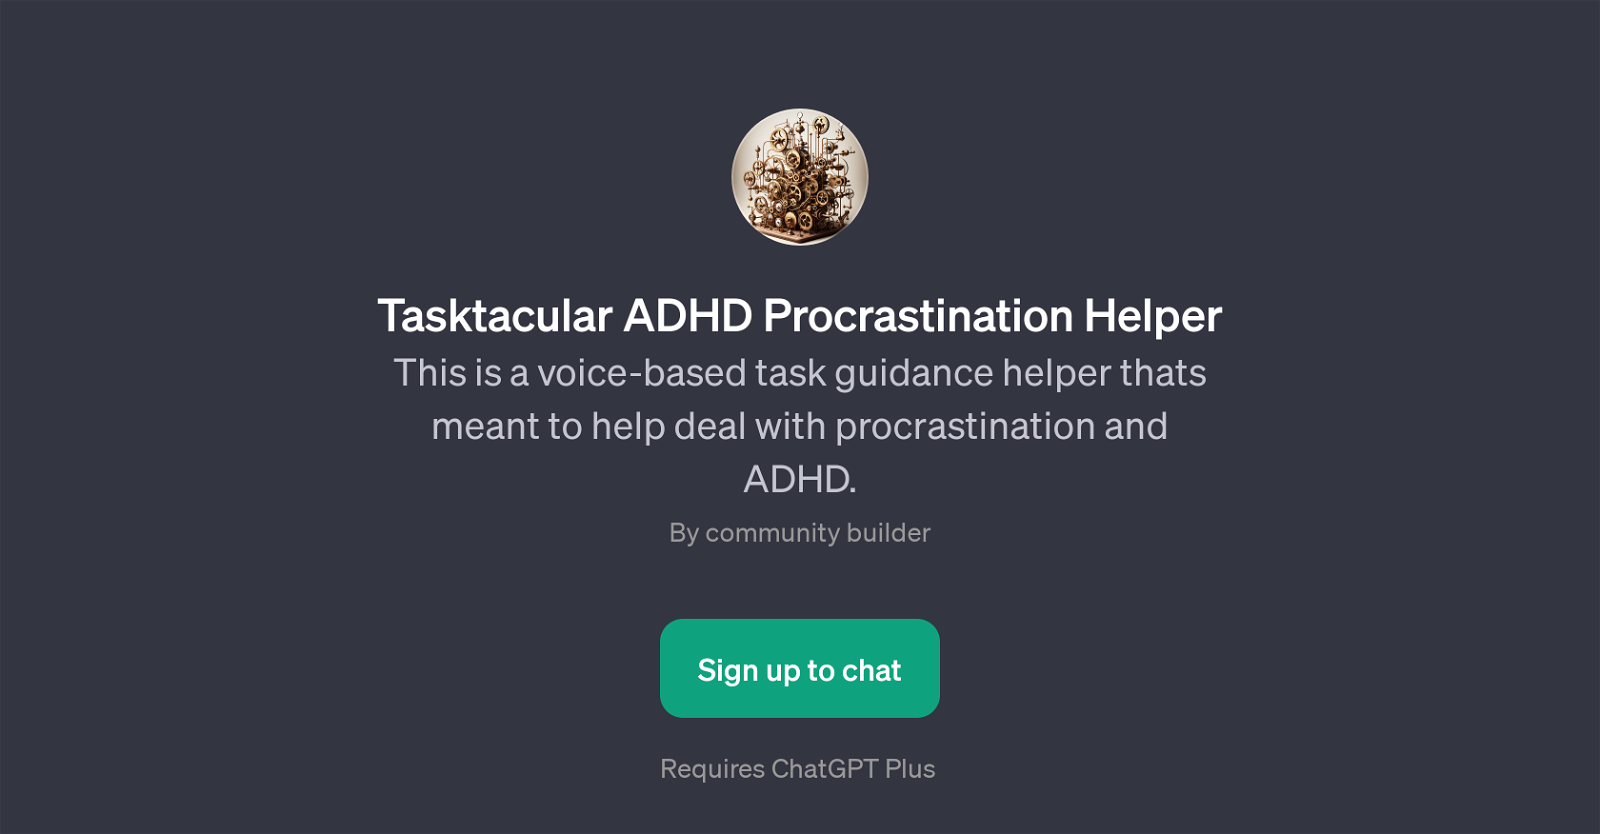 Tasktacular ADHD Procrastination Helper website